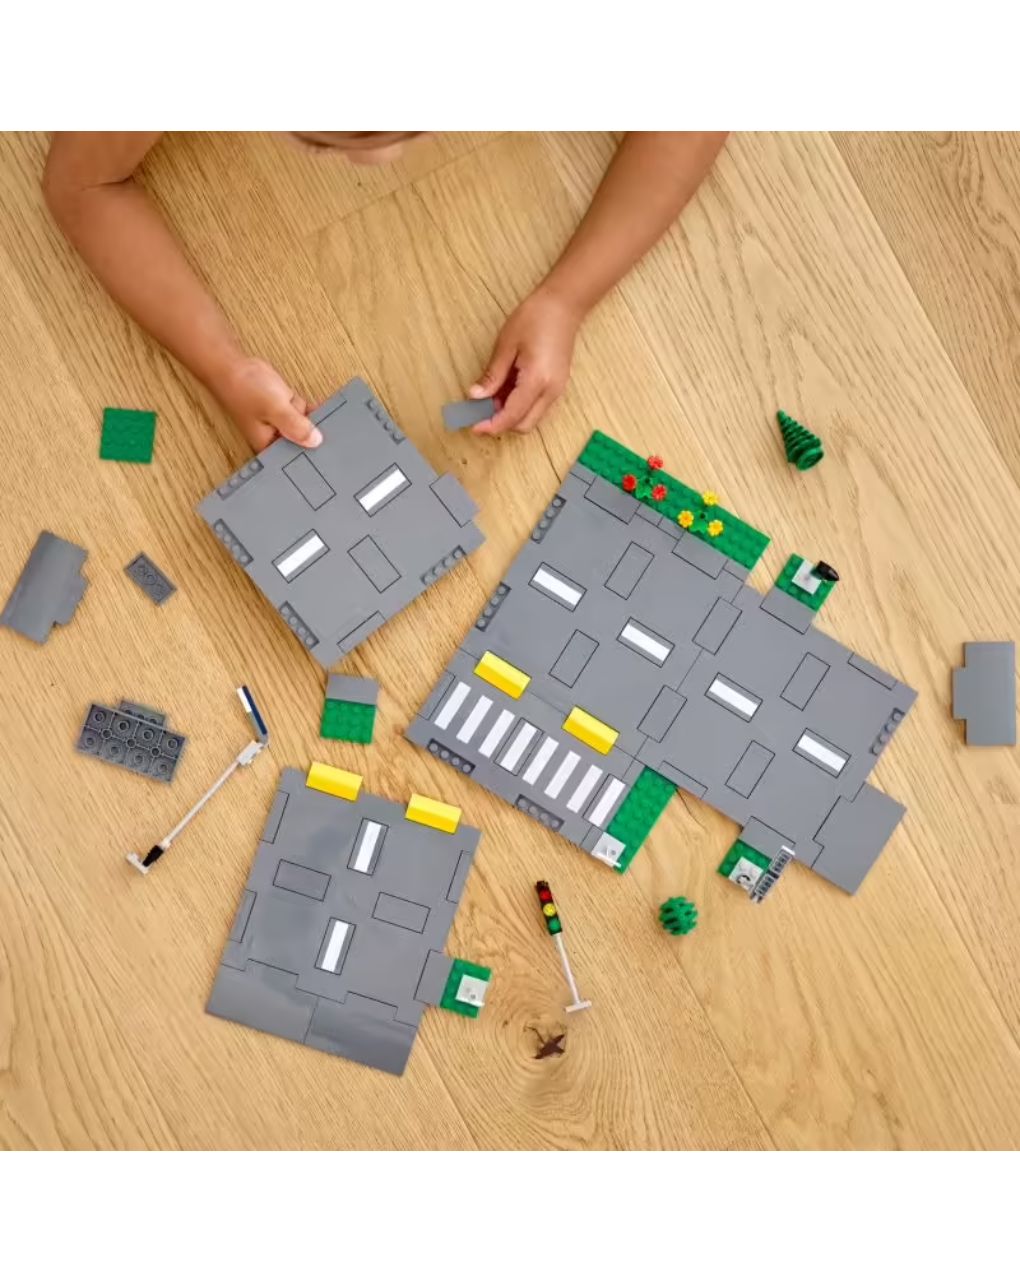 Lego city road plates 60304 - Lego City